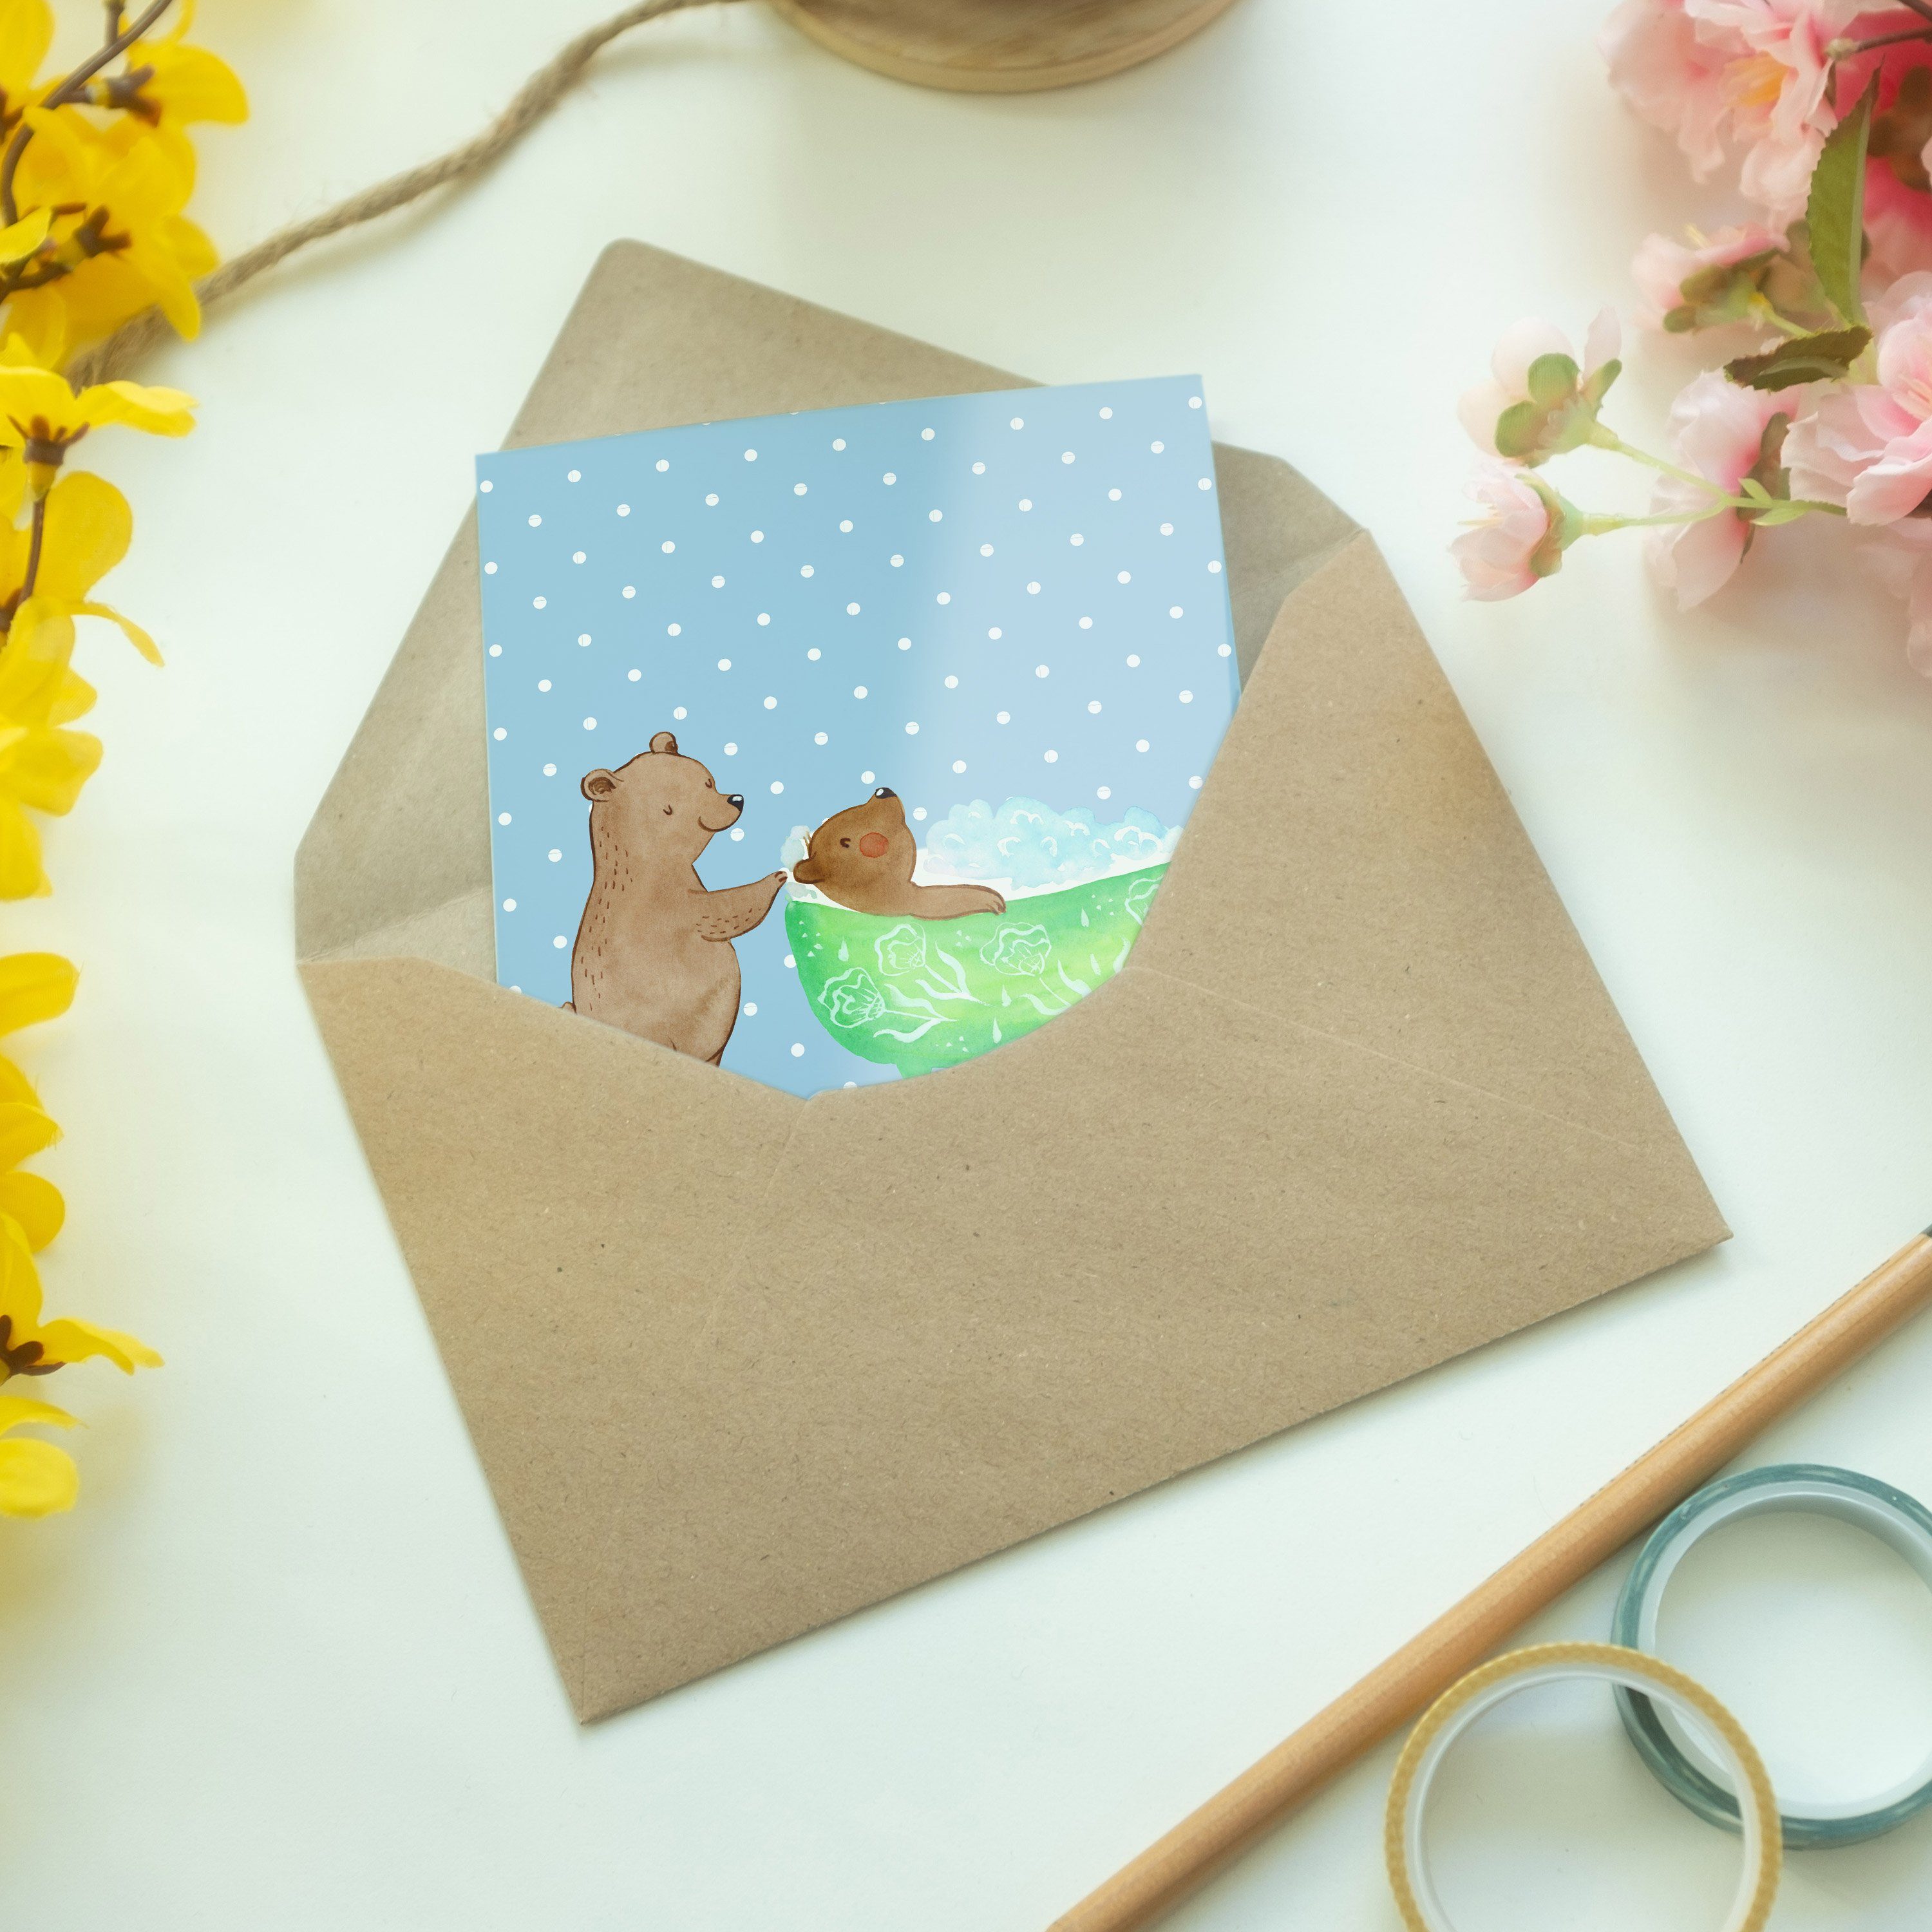 Grußkarte Geschenk, Pastell Muttertag, & Oma - Karte, Kla - Panda Schwester, Mrs. badet Blau Mr.